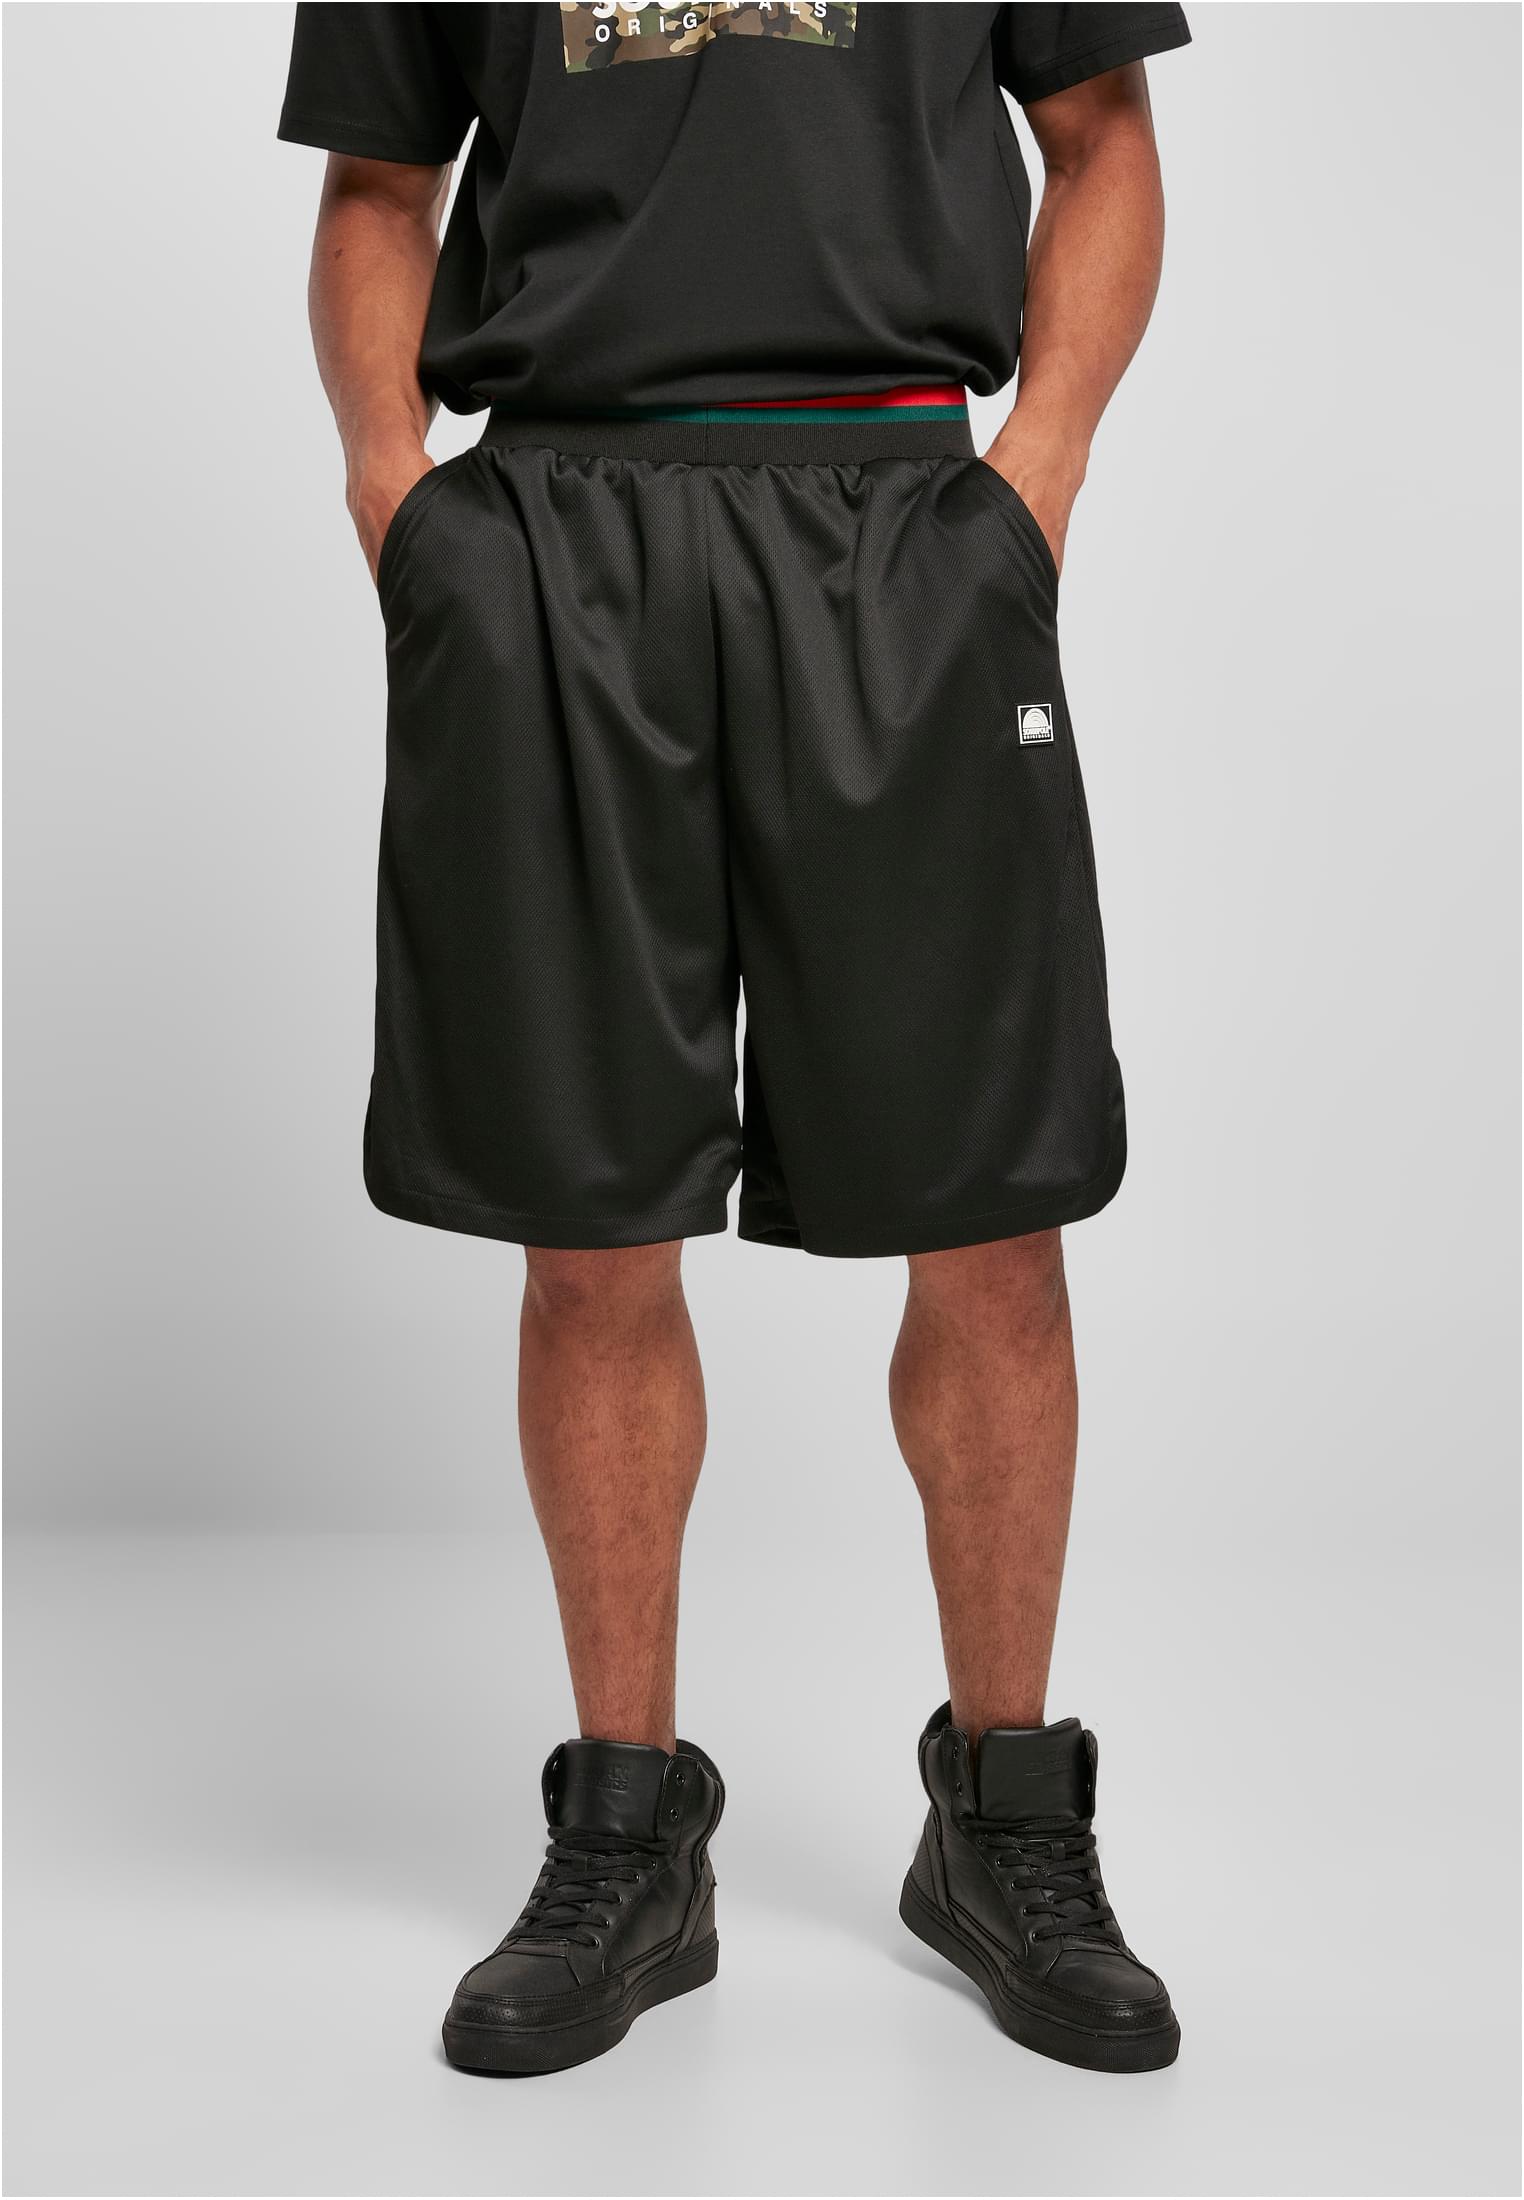 Southpole Mens Basic Basketball Mesh Shorts 